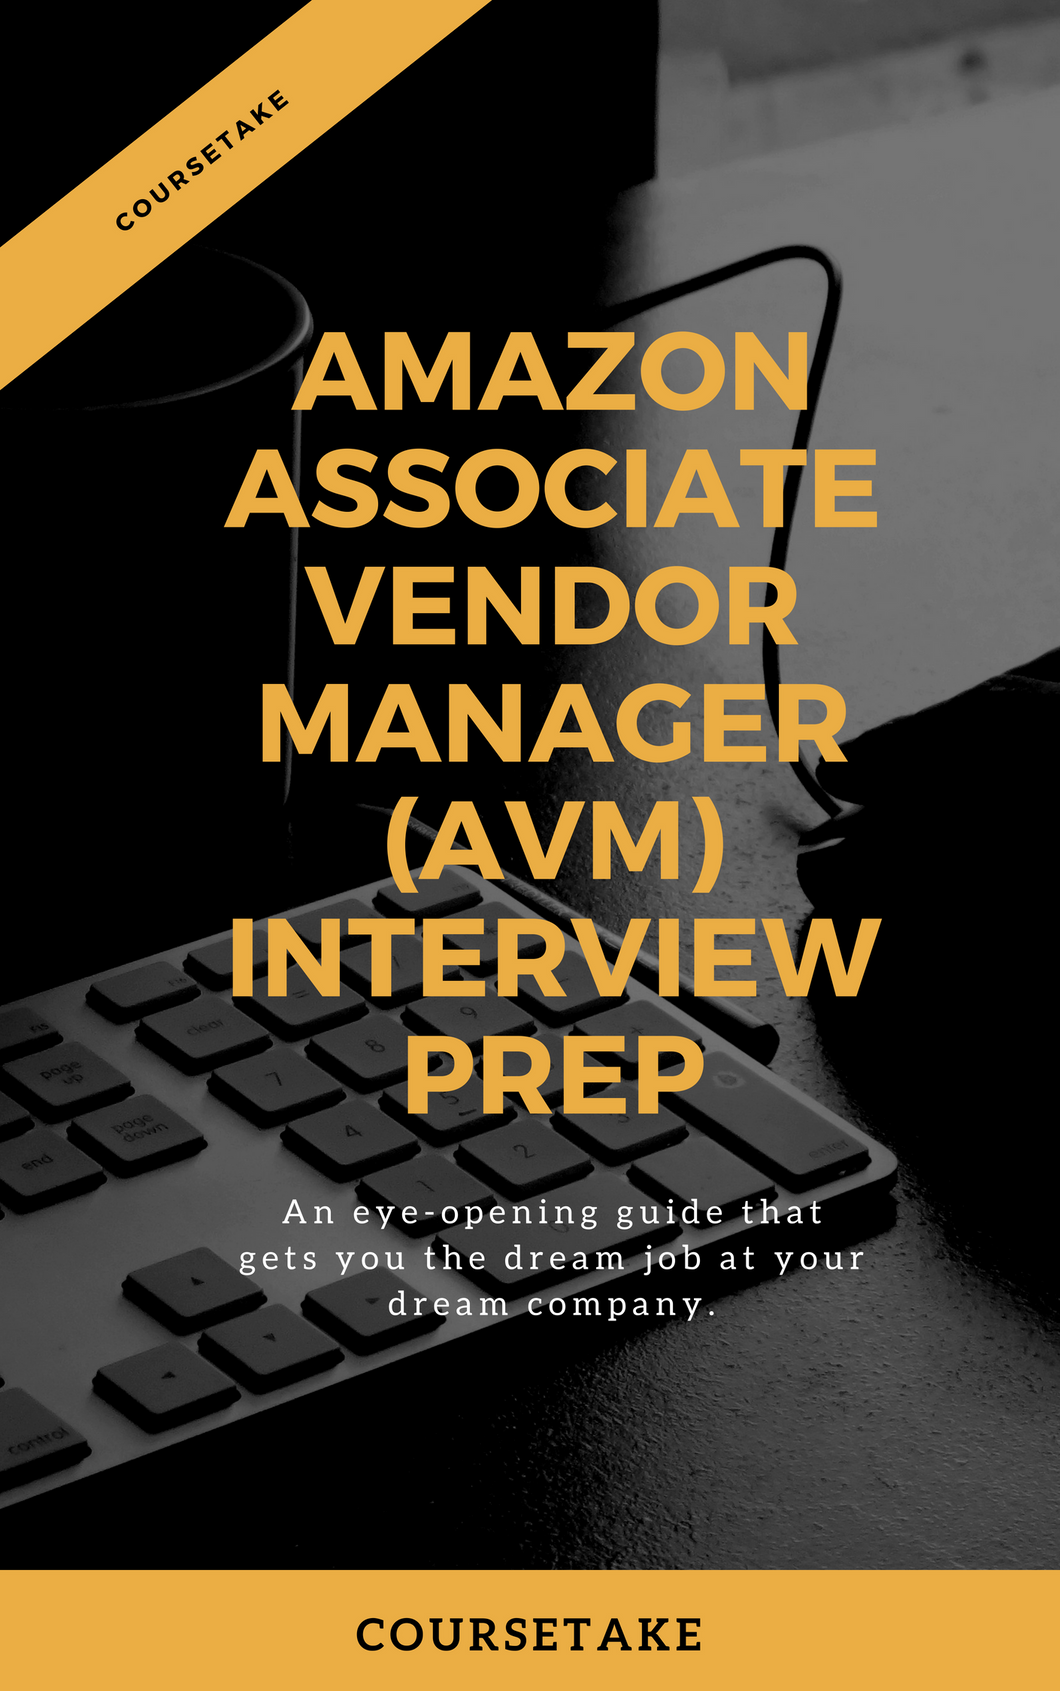 Amazon Associate Vendor Manager Interview Preparation Study Guide